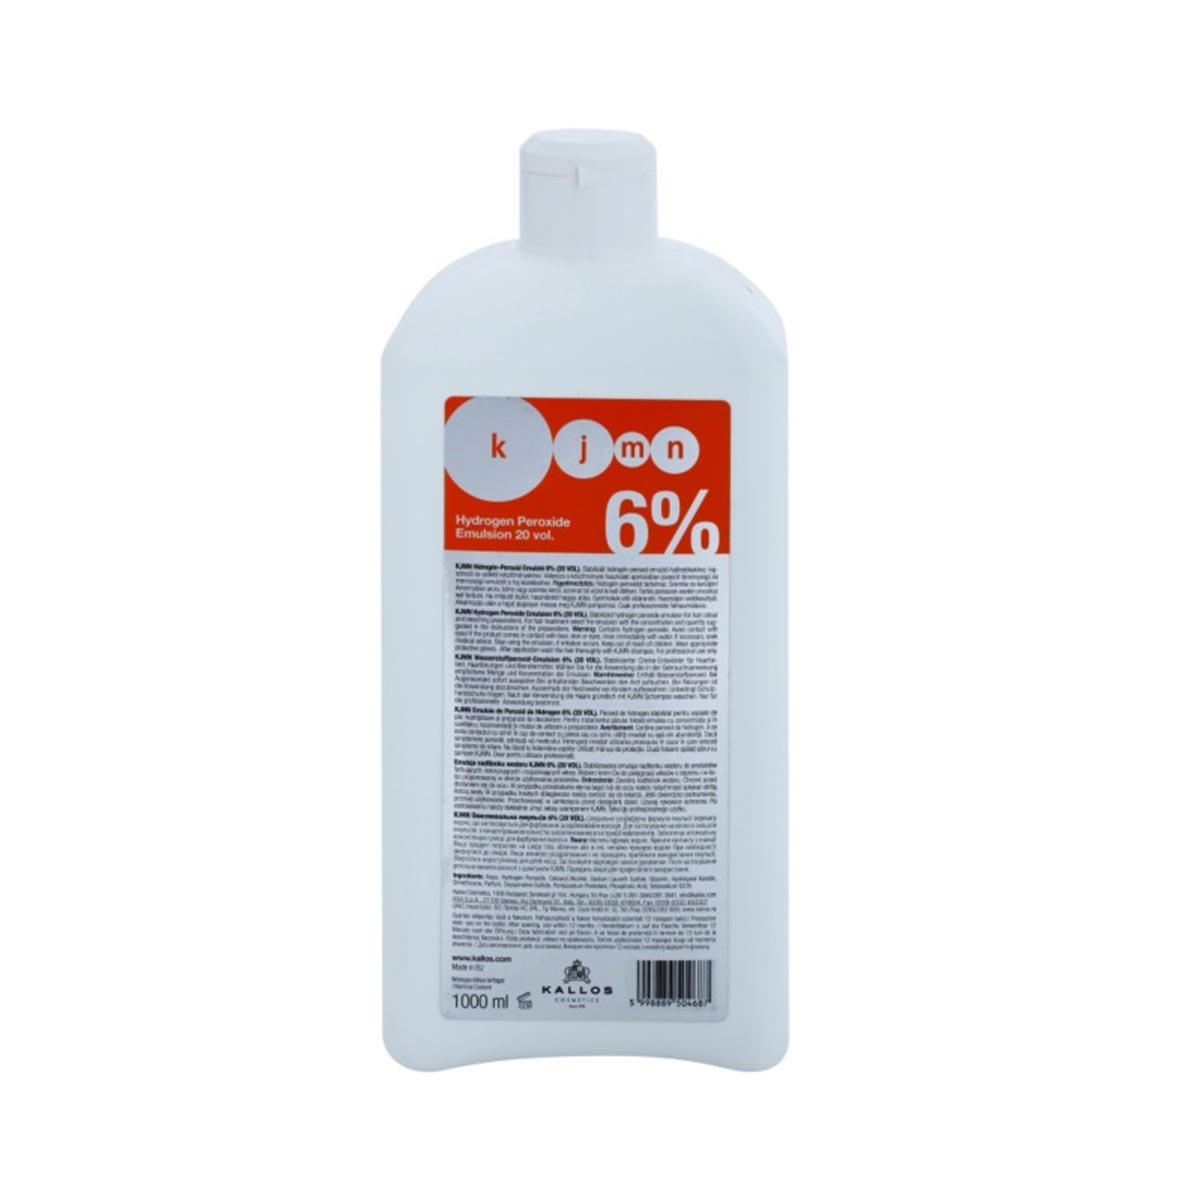 Kallos (KJMN) krémový oxidant neparfumovaný 6% - 1000 ml